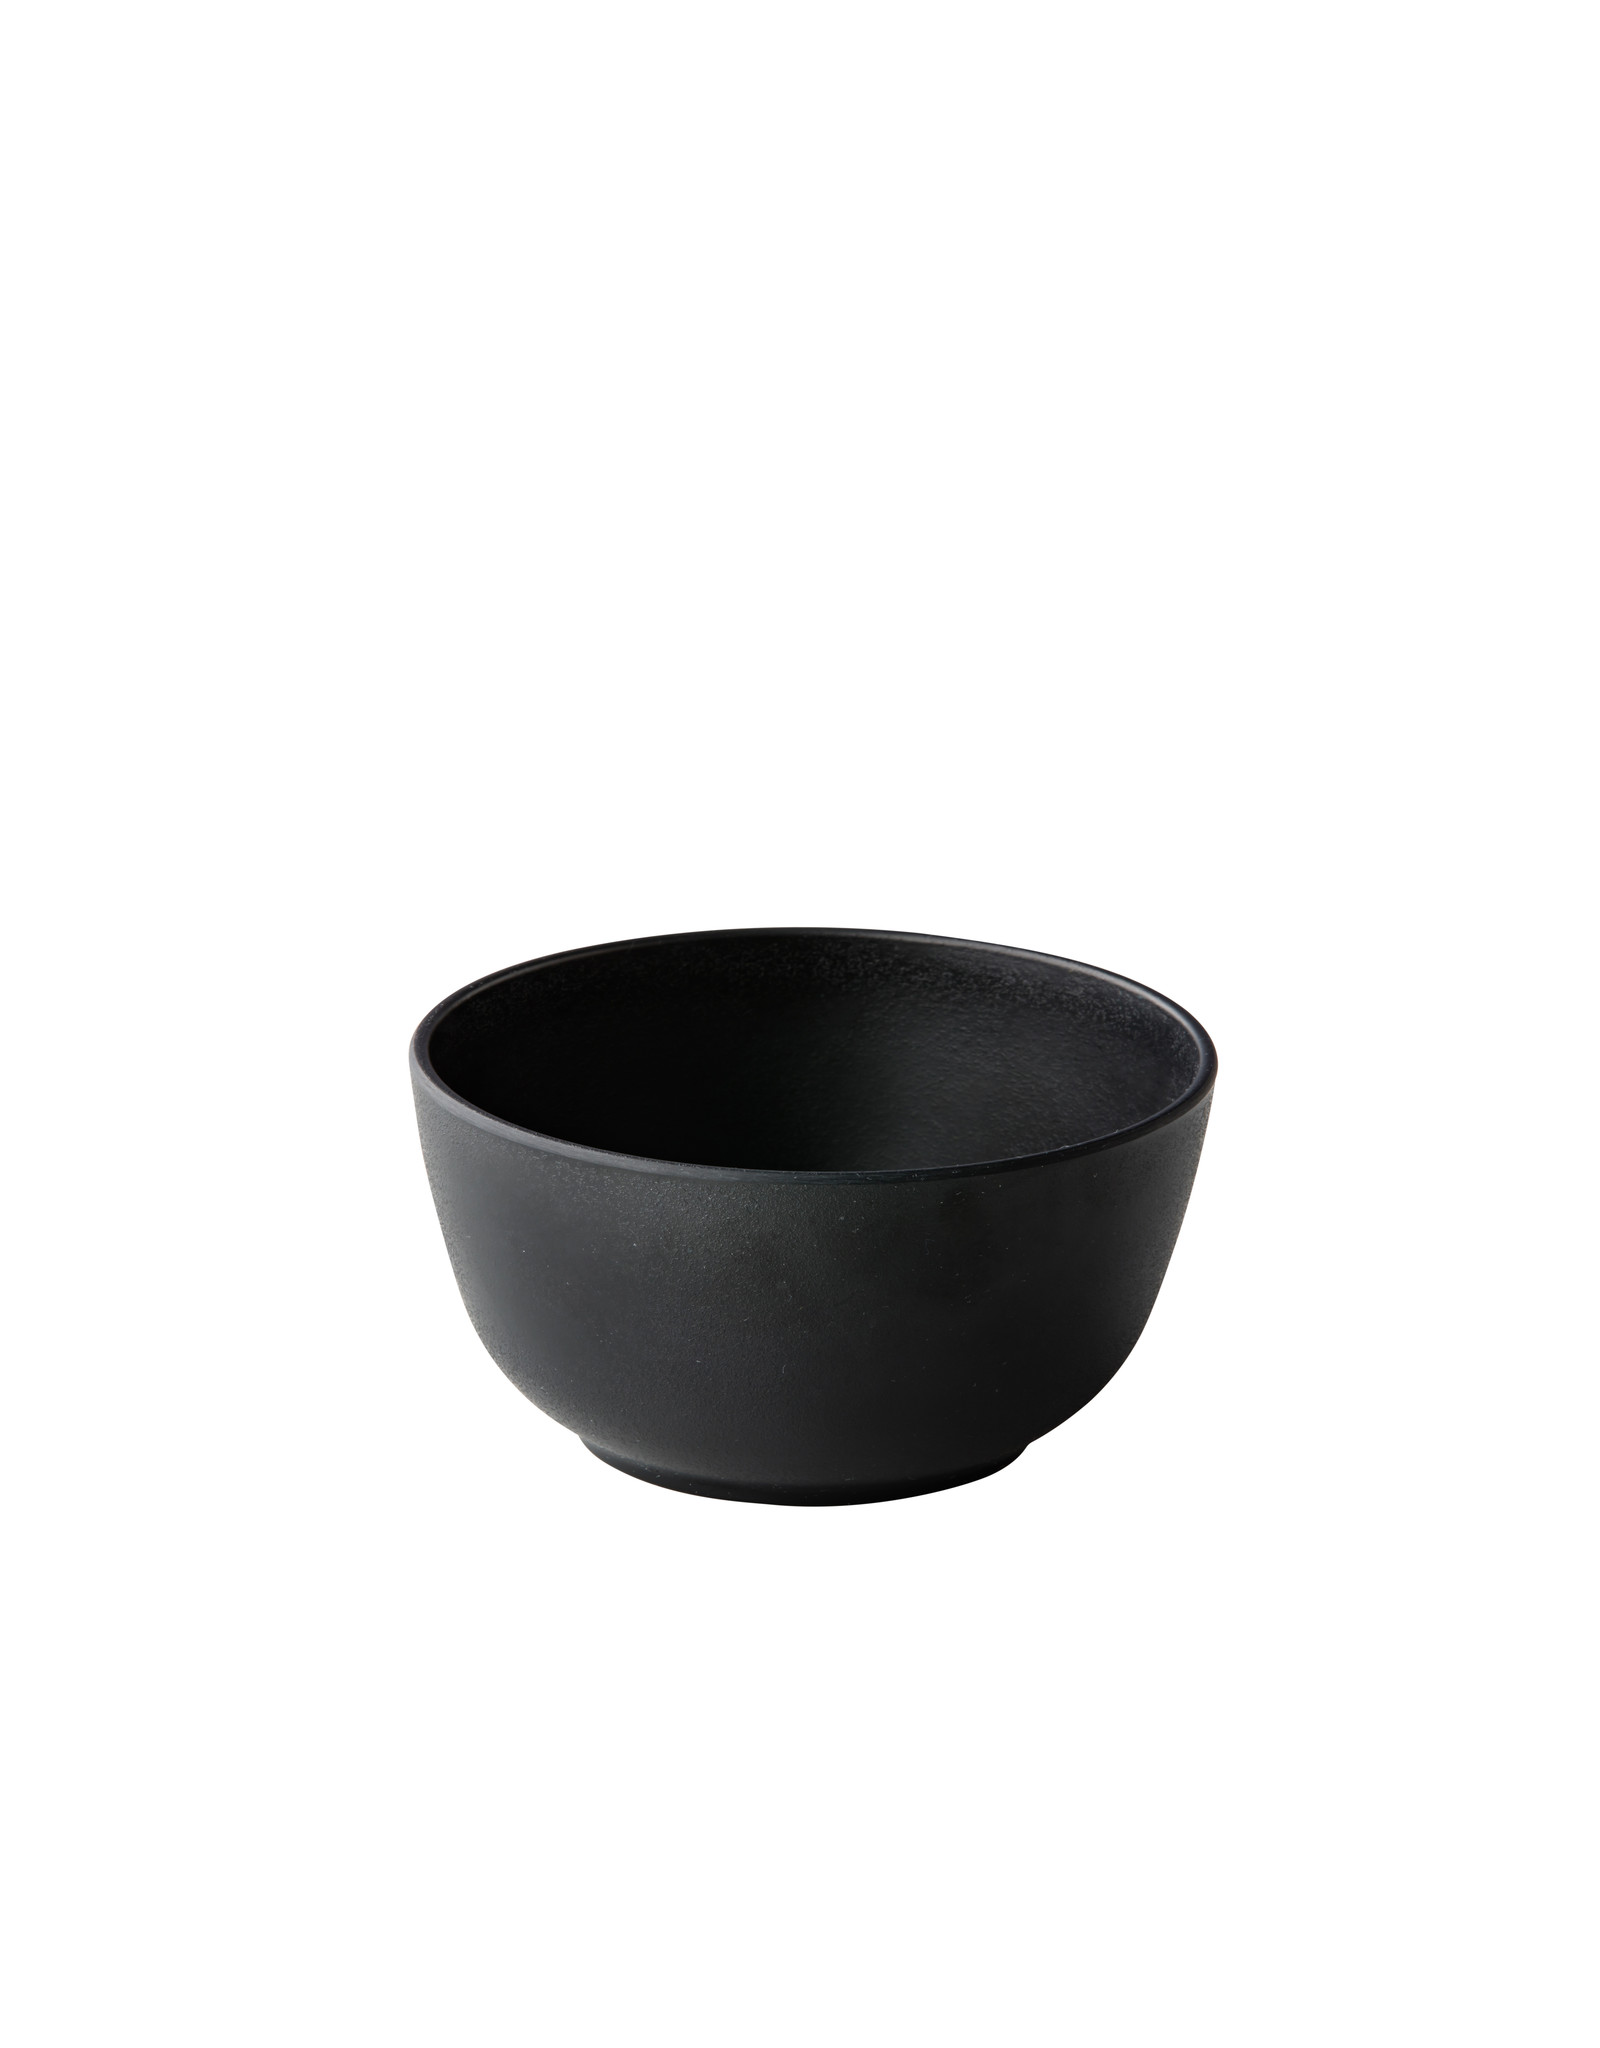 Stylepoint Bowl round black 11,3 high 5,5 cm